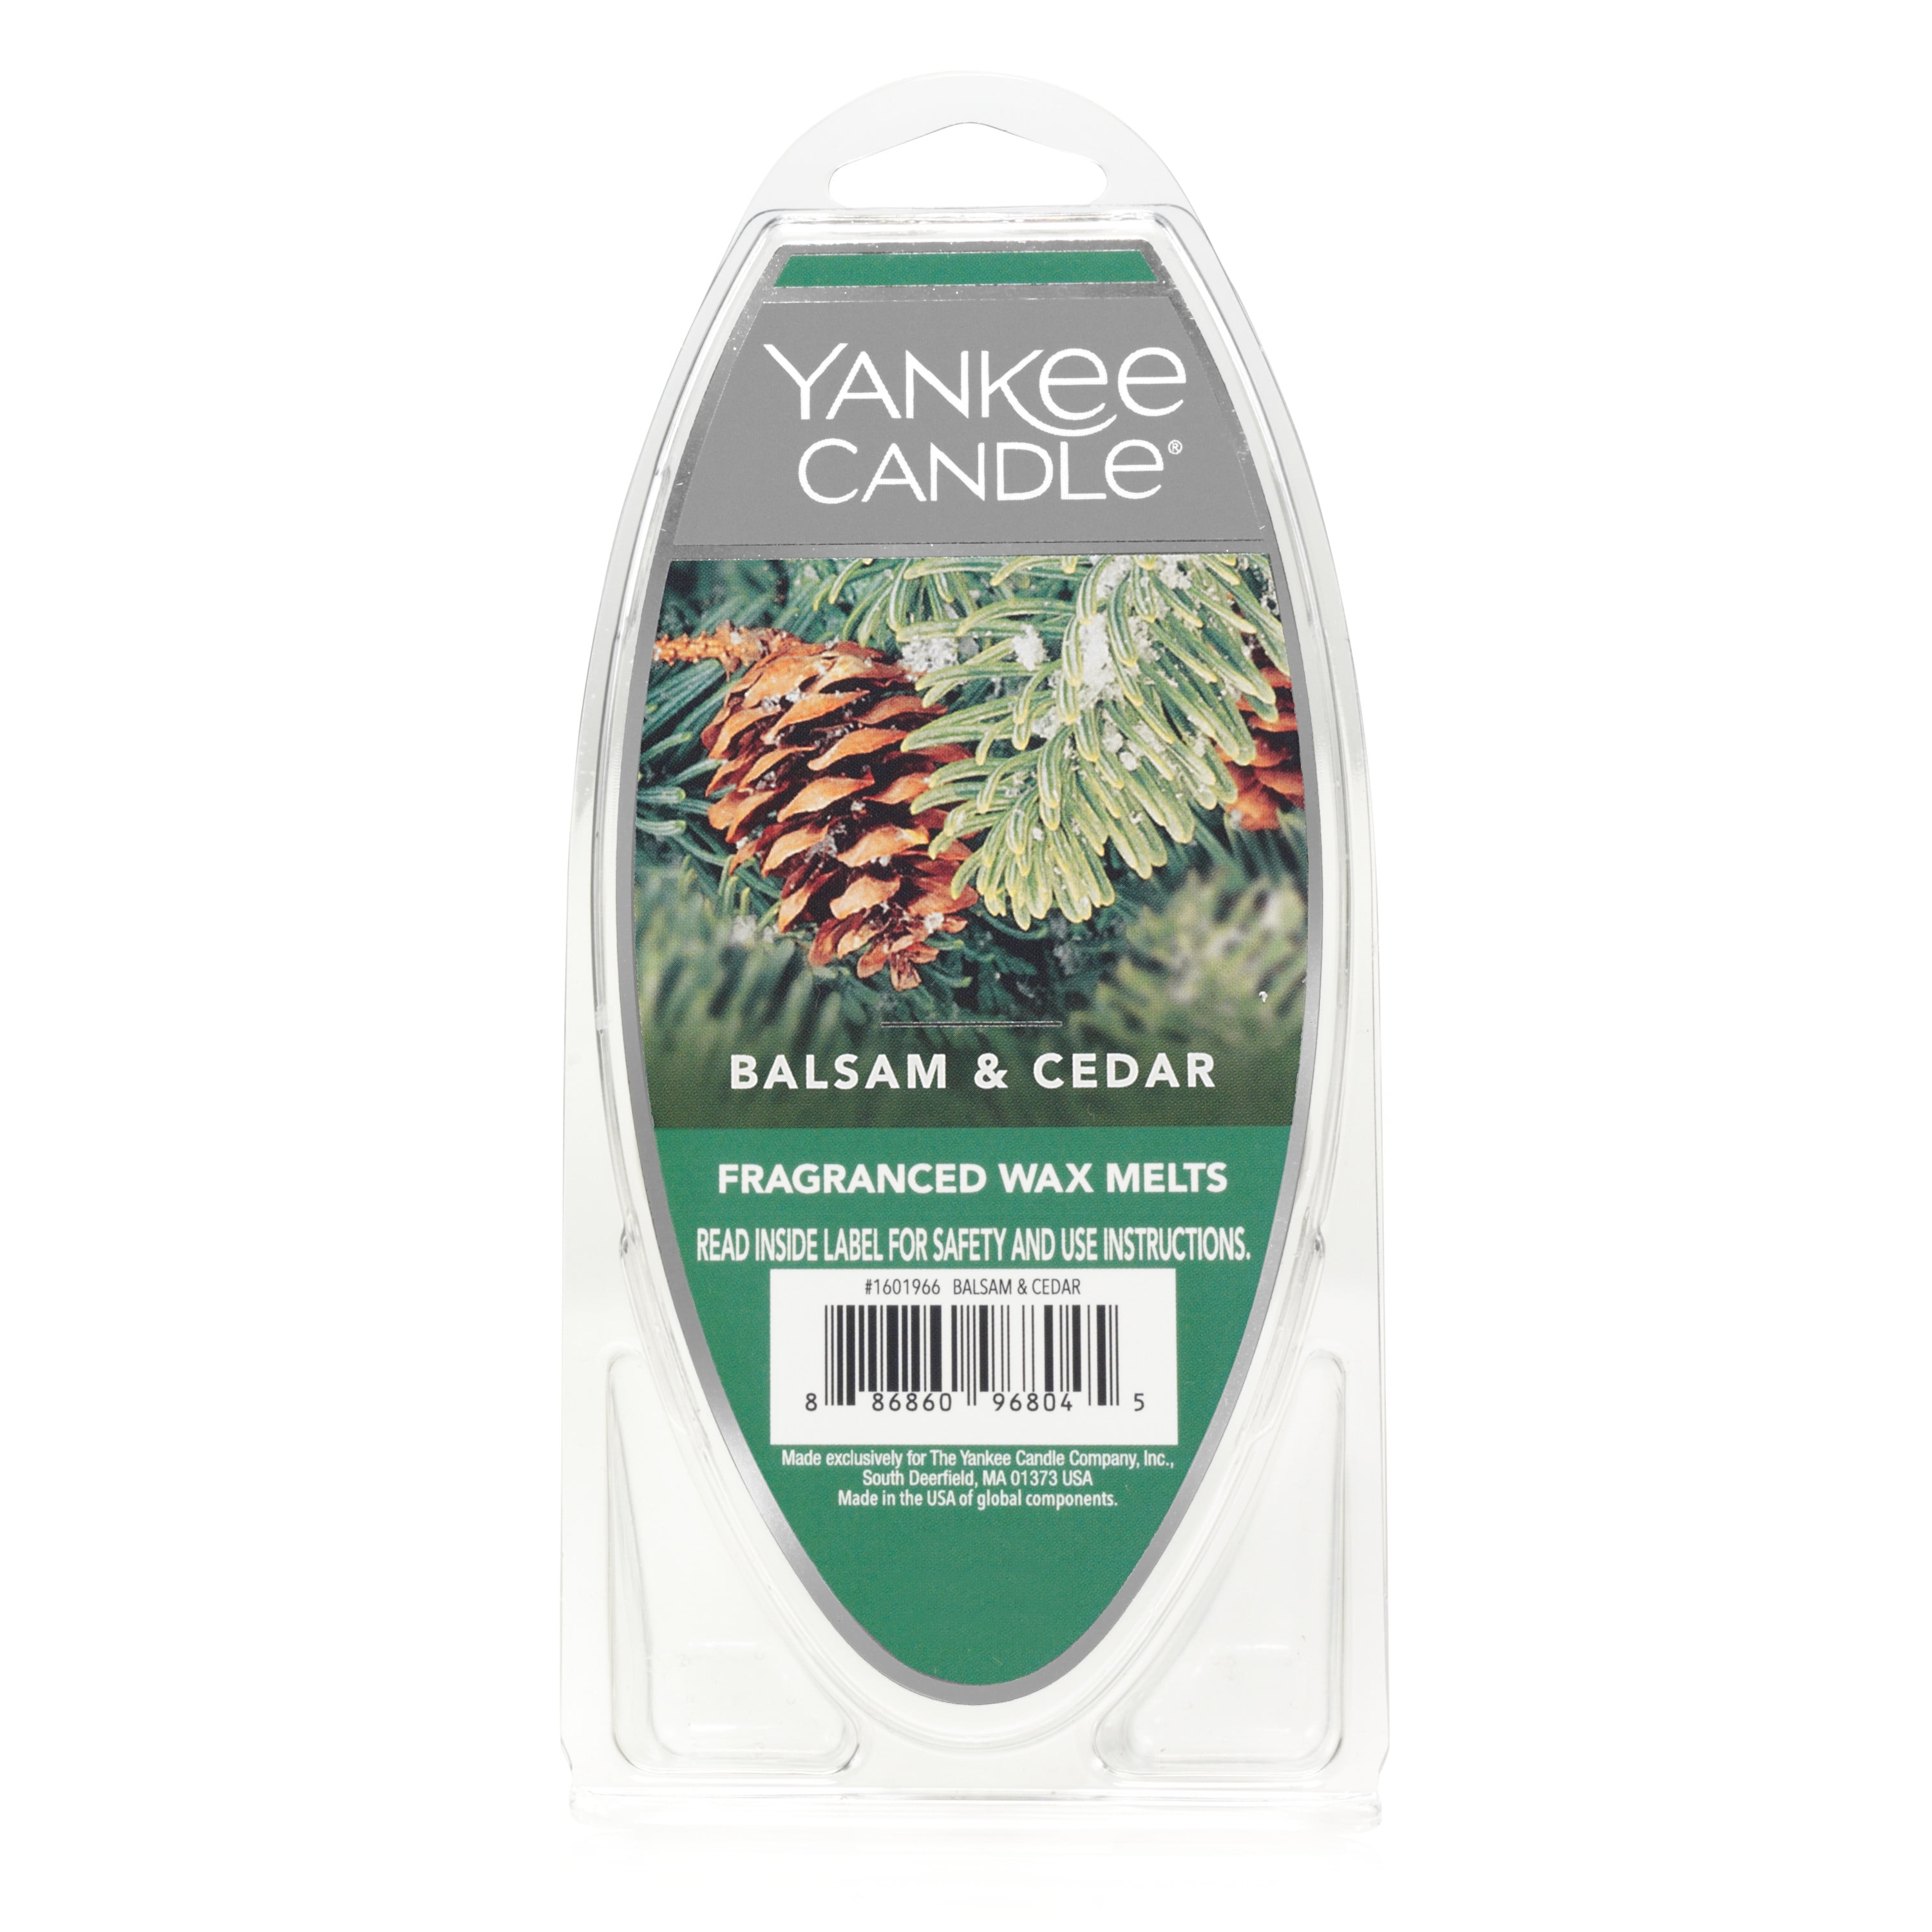 Yankee Candle Wax Melts Evergreen Mist Cedar Balsom Apple Cinnamon Pumpkin Spice